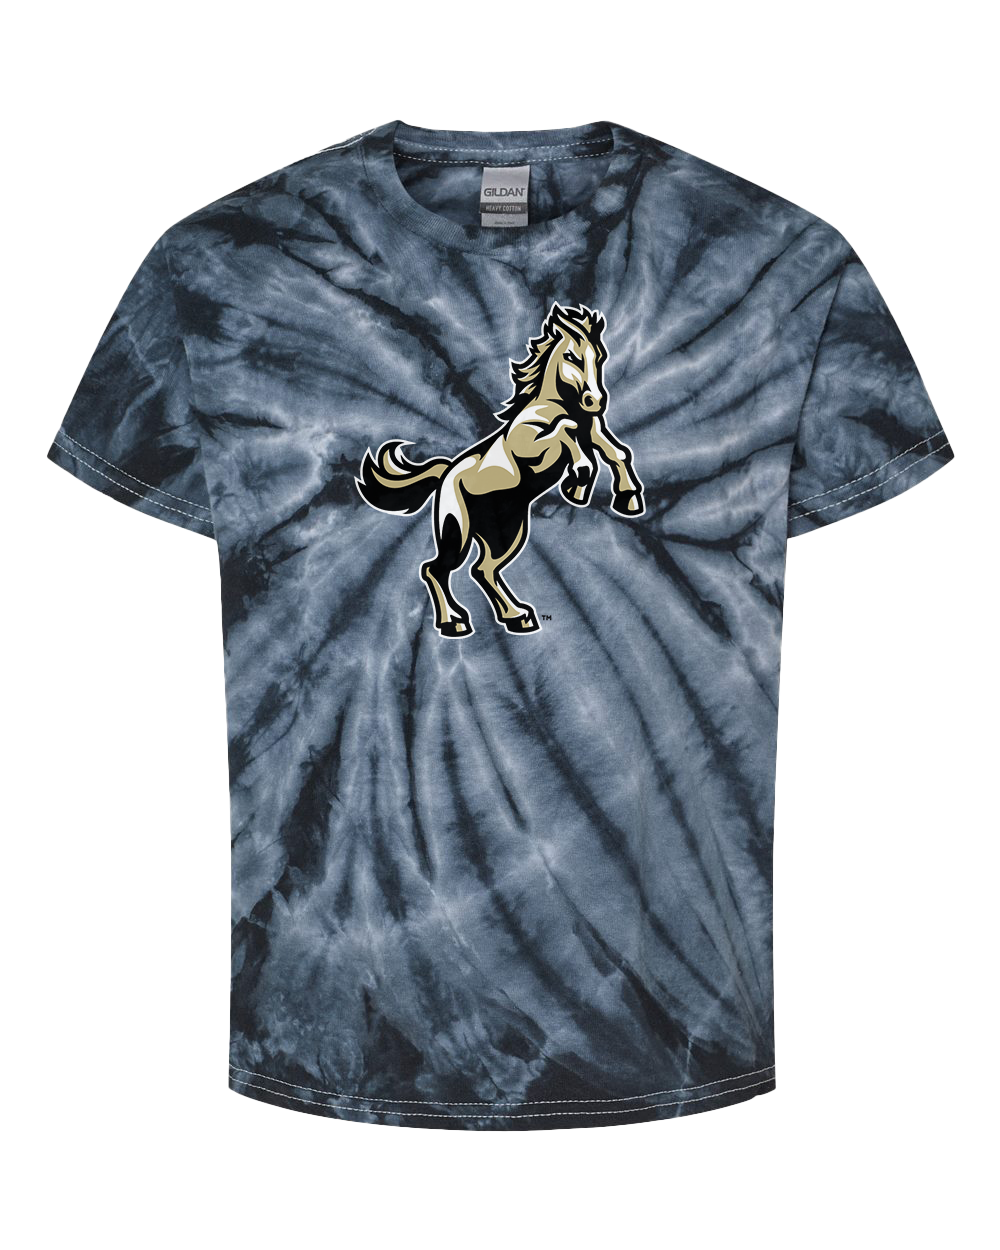 Daleville Broncos Youth Tie Dye Tshirt - Black